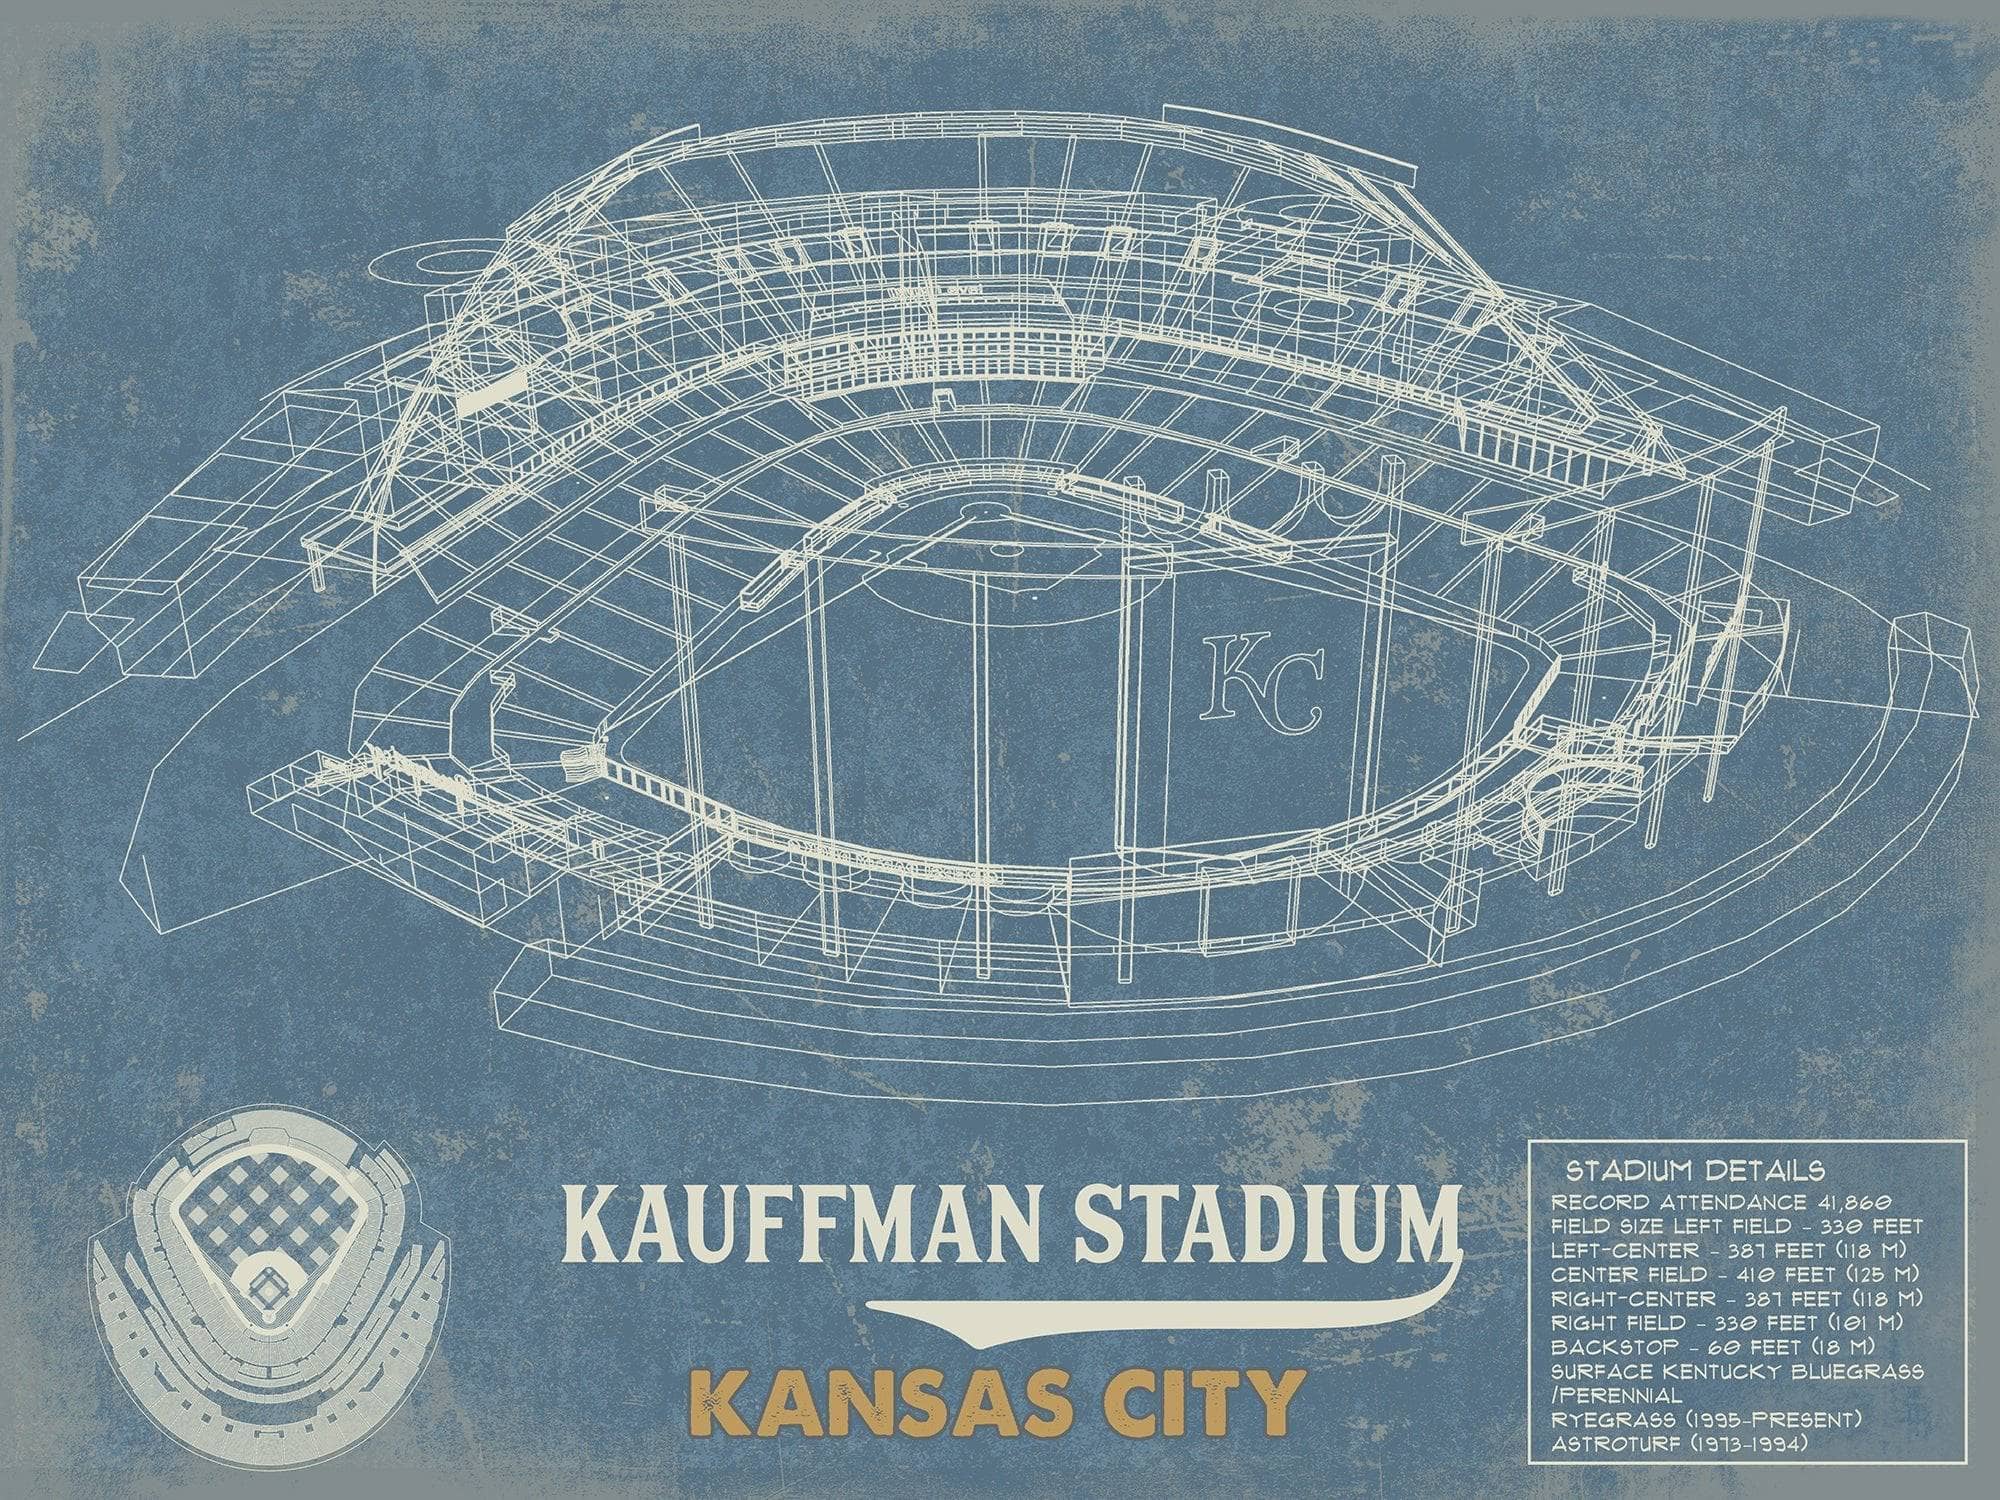 Cutler West Baseball Collection 14" x 11" / Unframed Kansas City Royals Kauffman Stadium Vintage Baseball Print 694509217-TOP